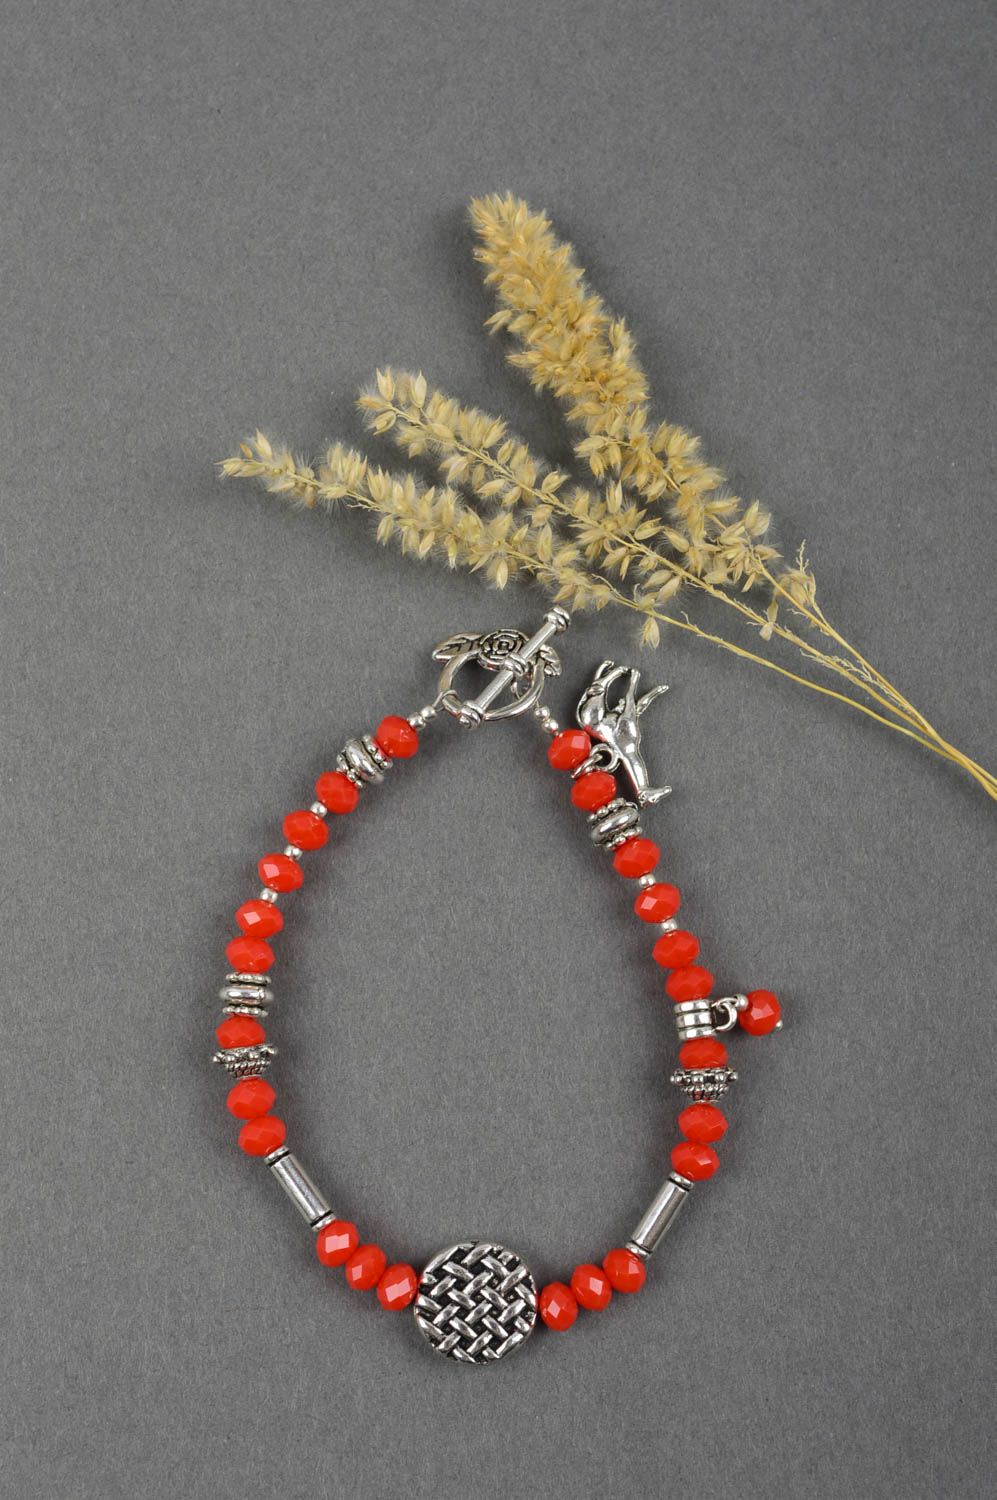 Handmade red beads bracelet with metal giraffe charm photo 1